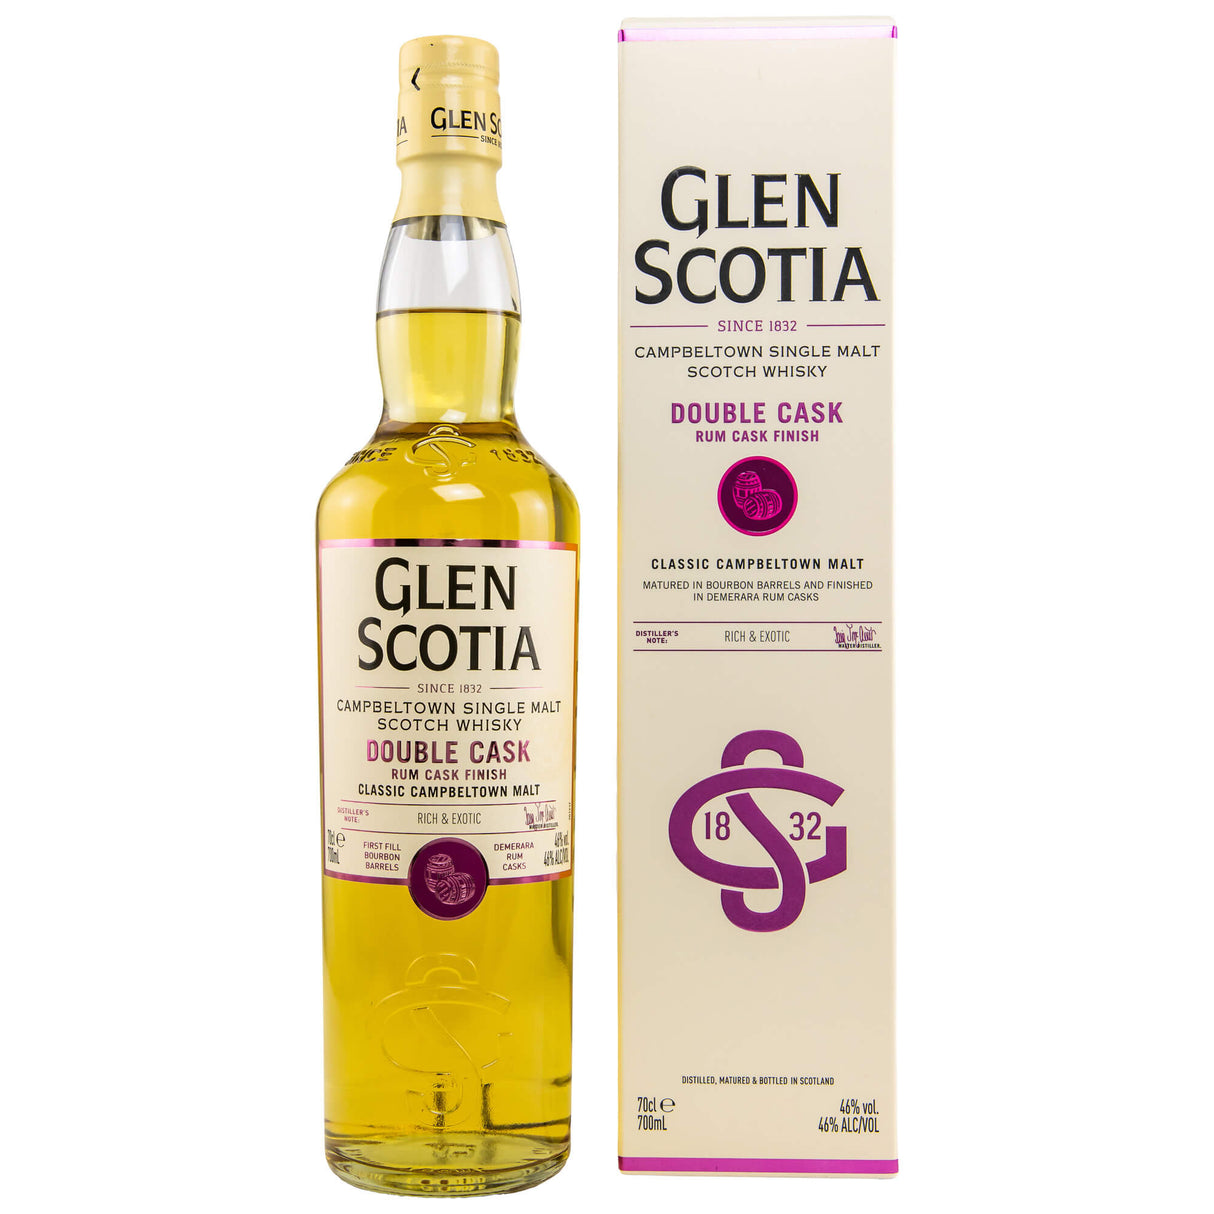 Glen Scotia Double Cask Rum Finish Campbeltown Single Malt Scotch Whisky